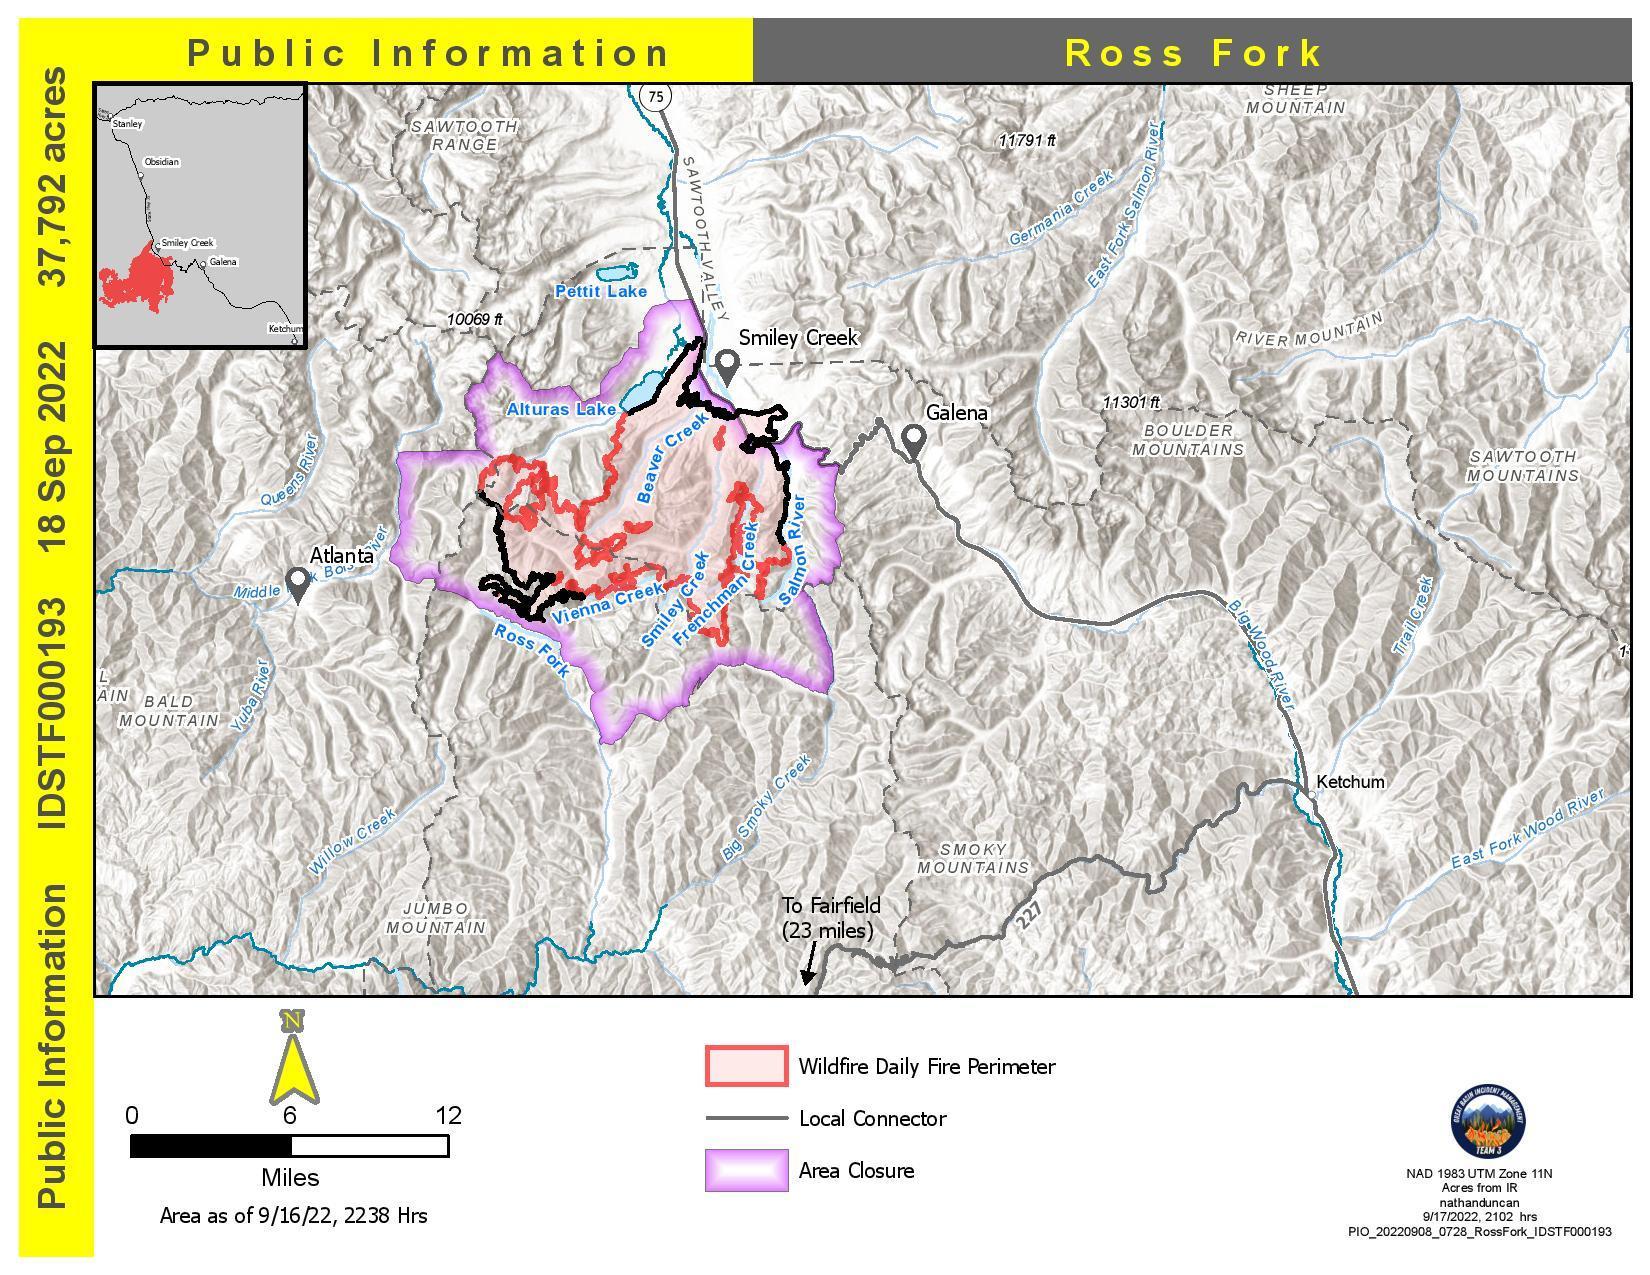 Ross Fork Fire information map, Sunday, Sept 18